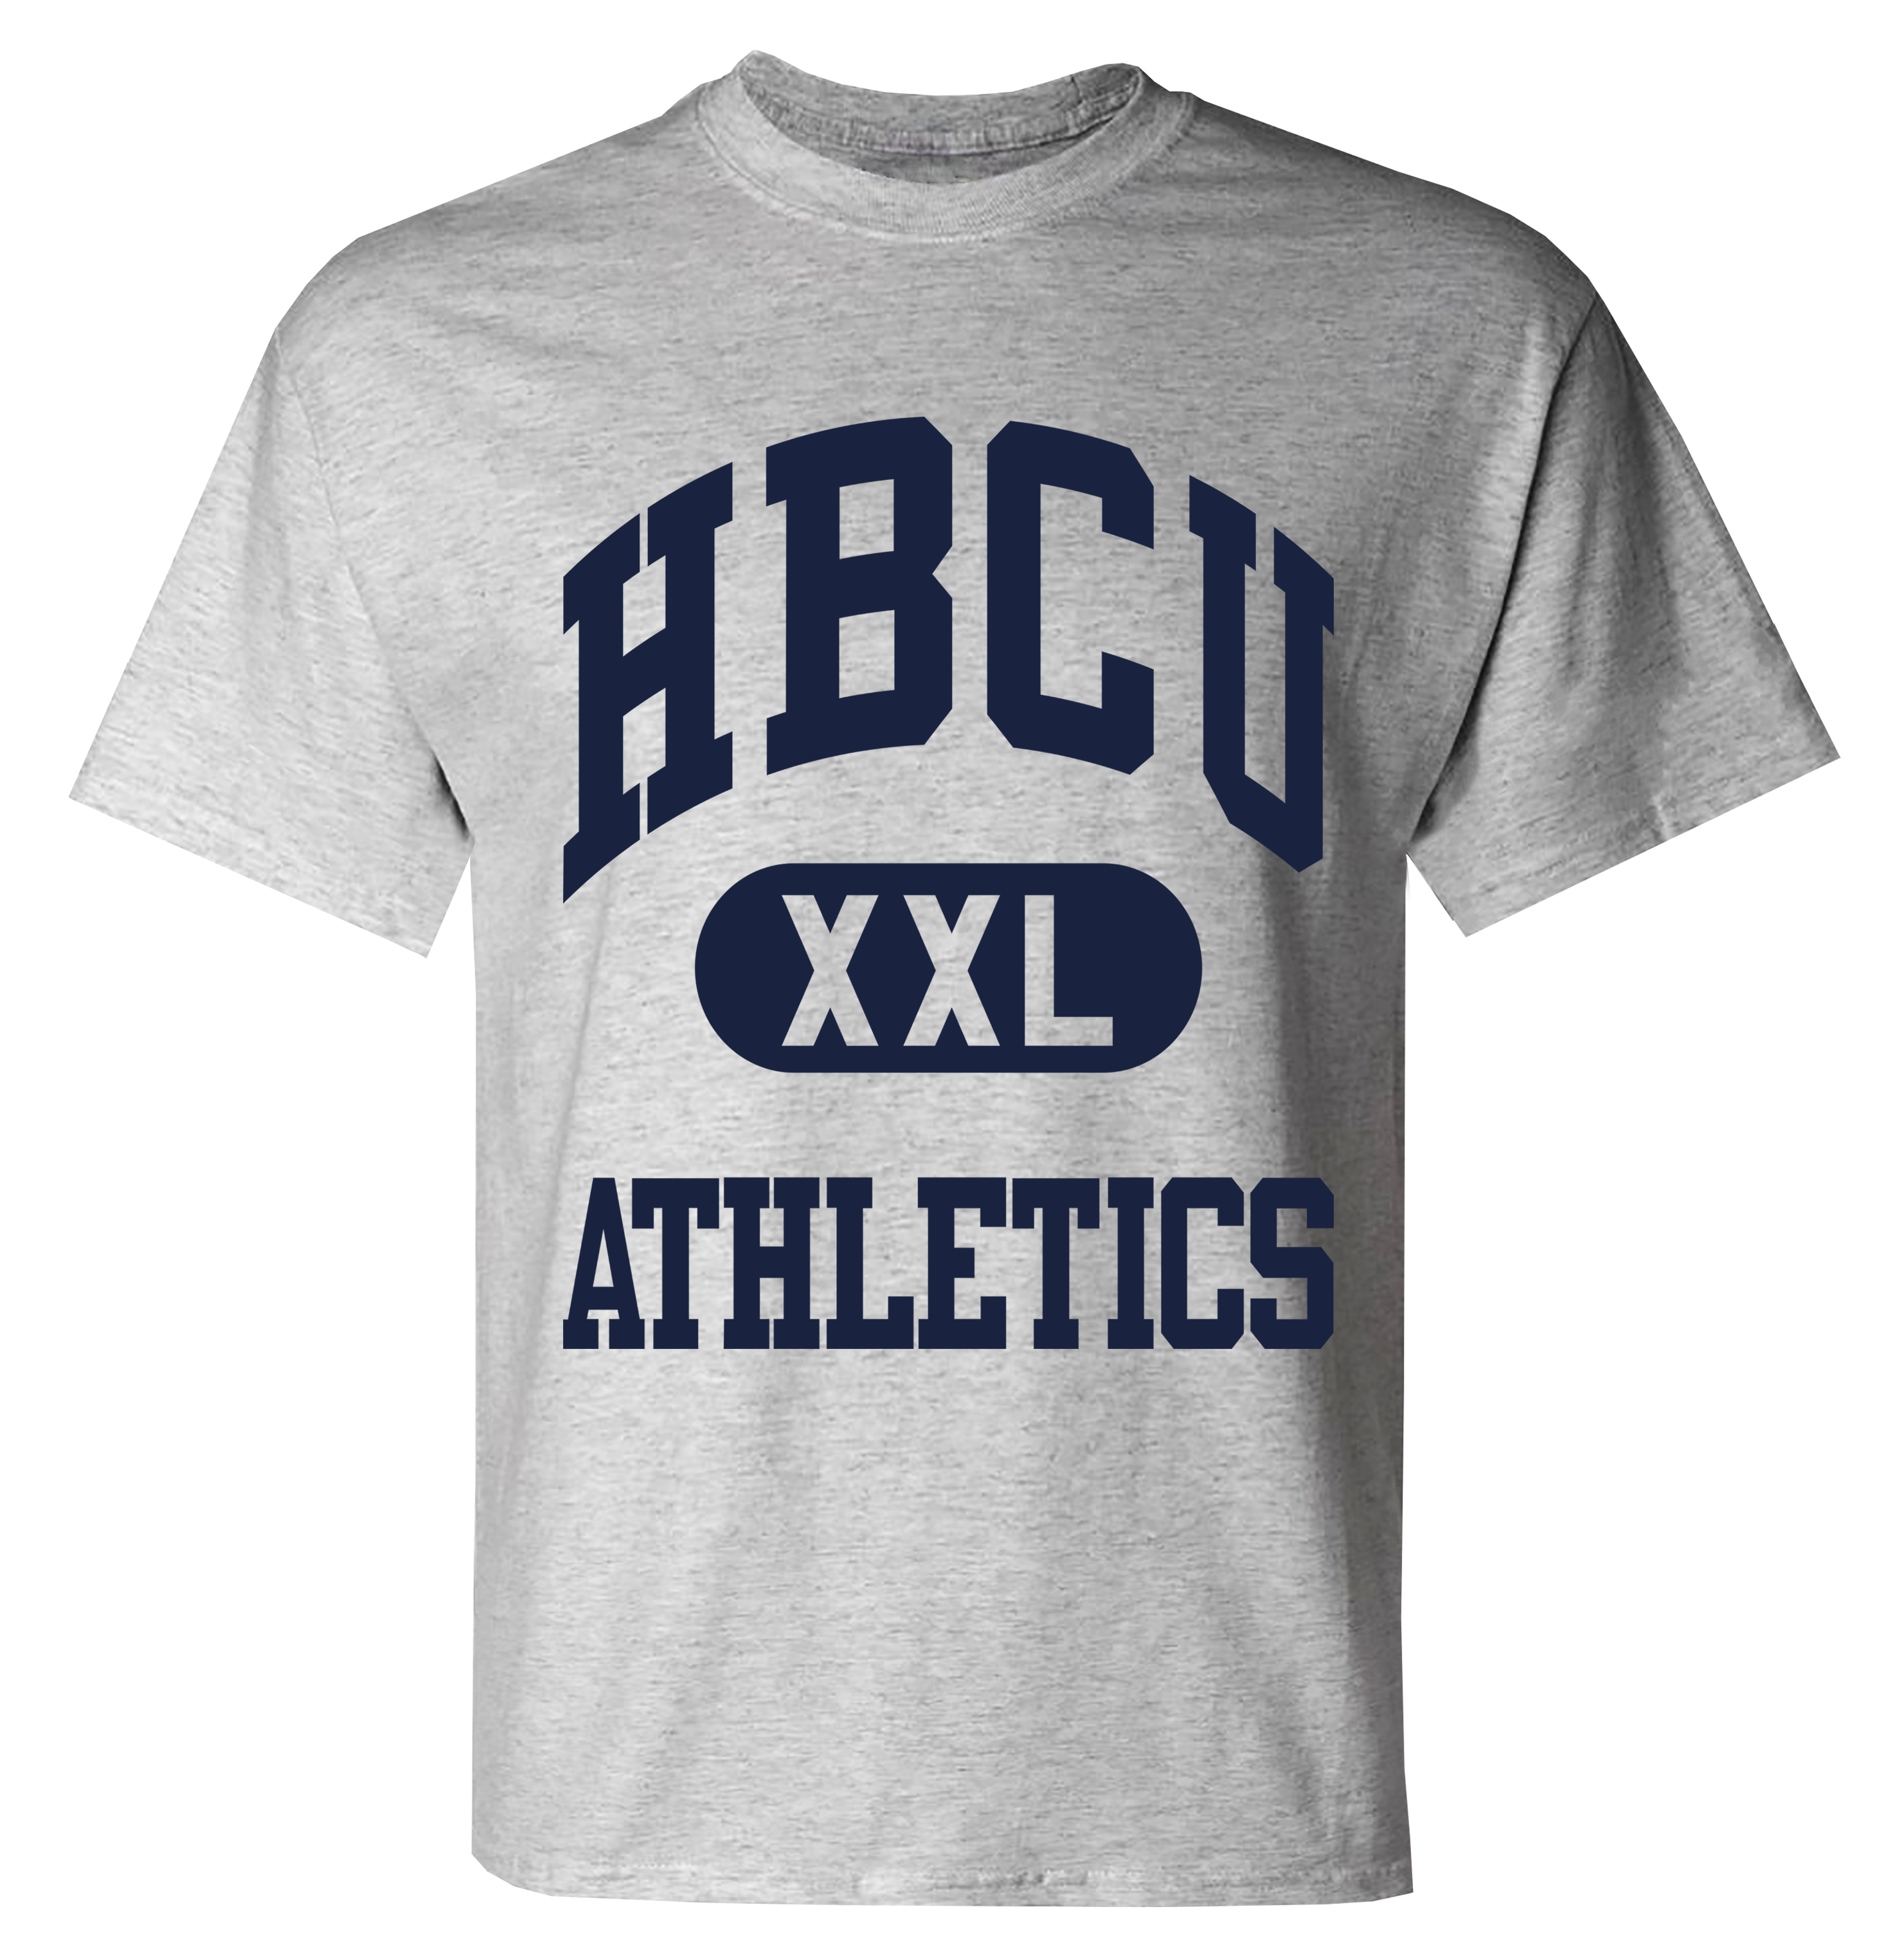 HBCU Athletics T-Shirt